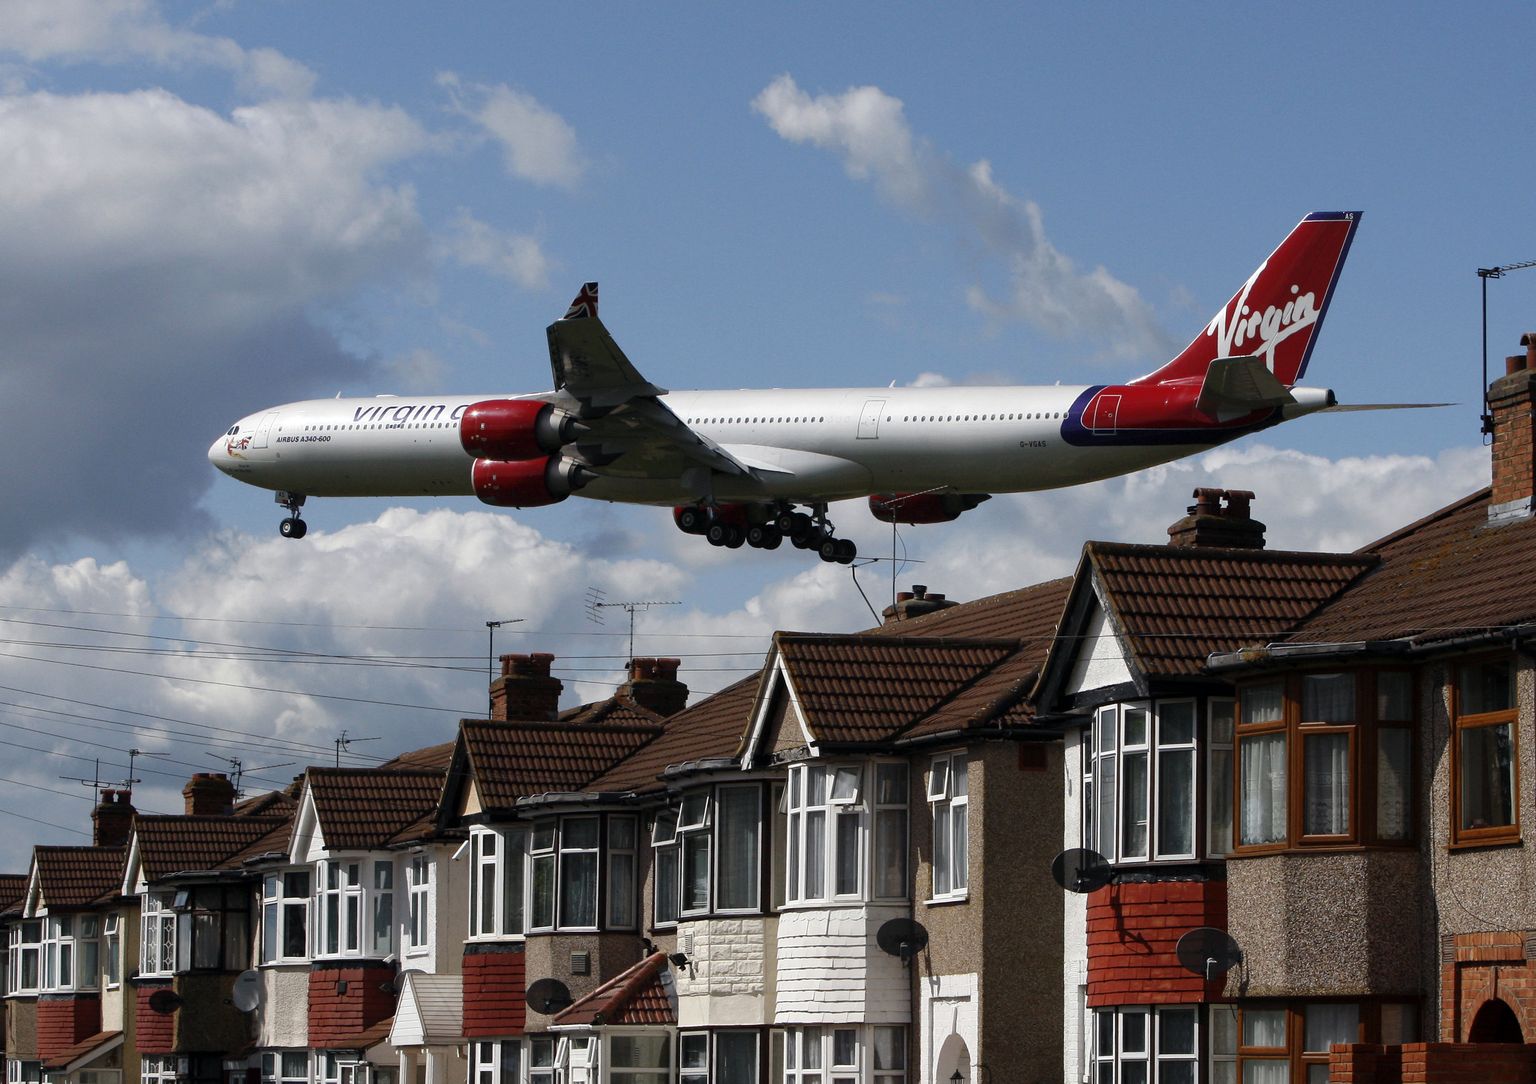 Virgin Atlantic lennuk maandumas Heathrow lennuväljale.